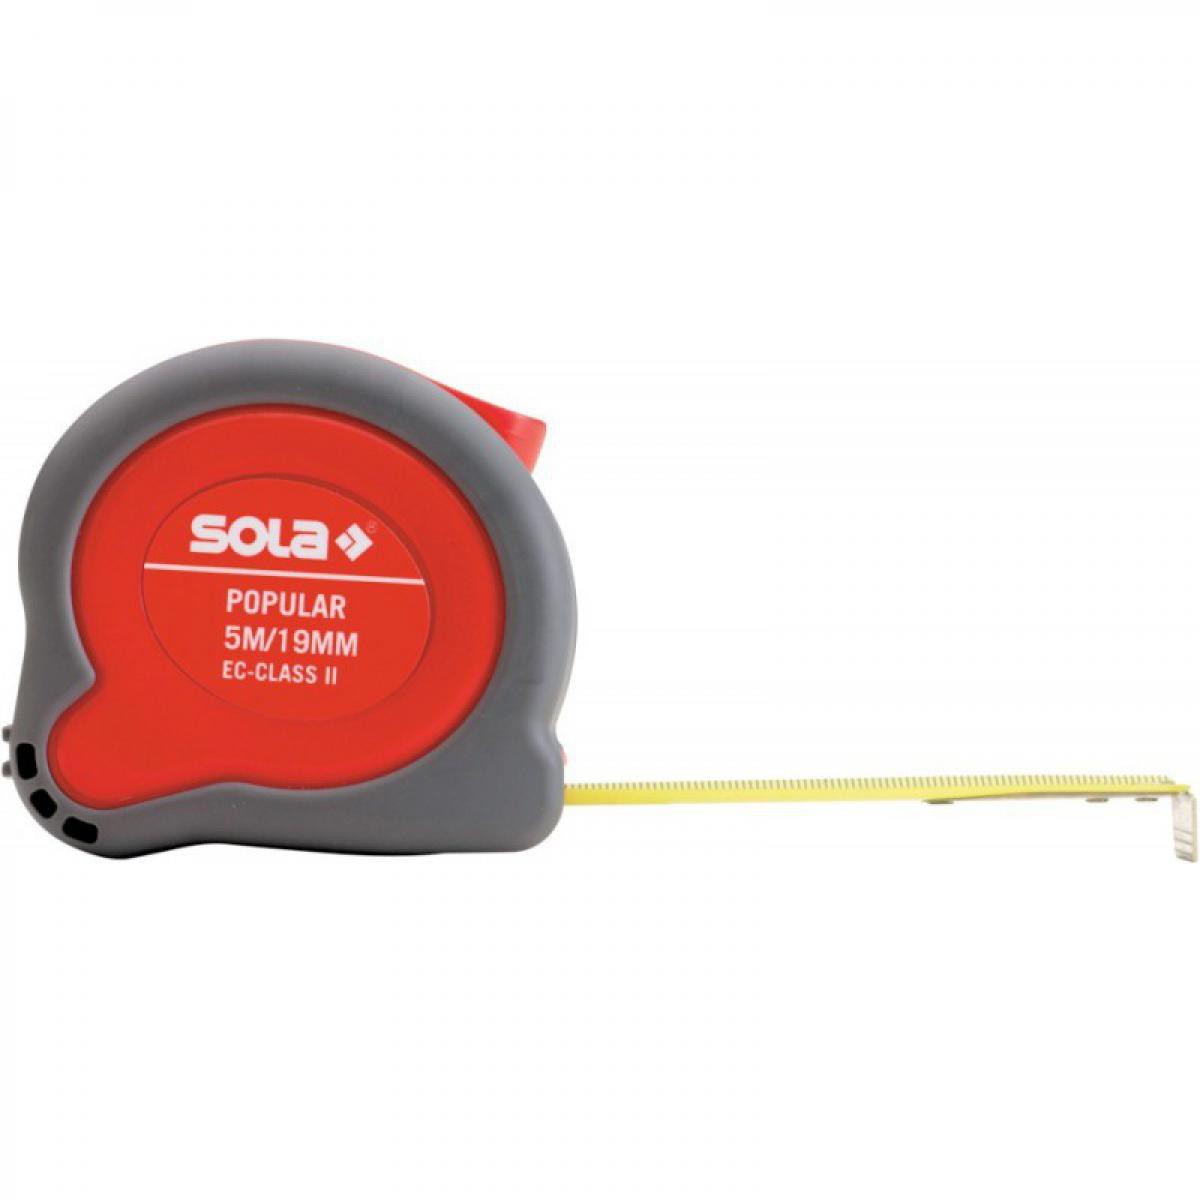 Sola - Mètre ruban Popular 5m x 19mm Sola - Mètres